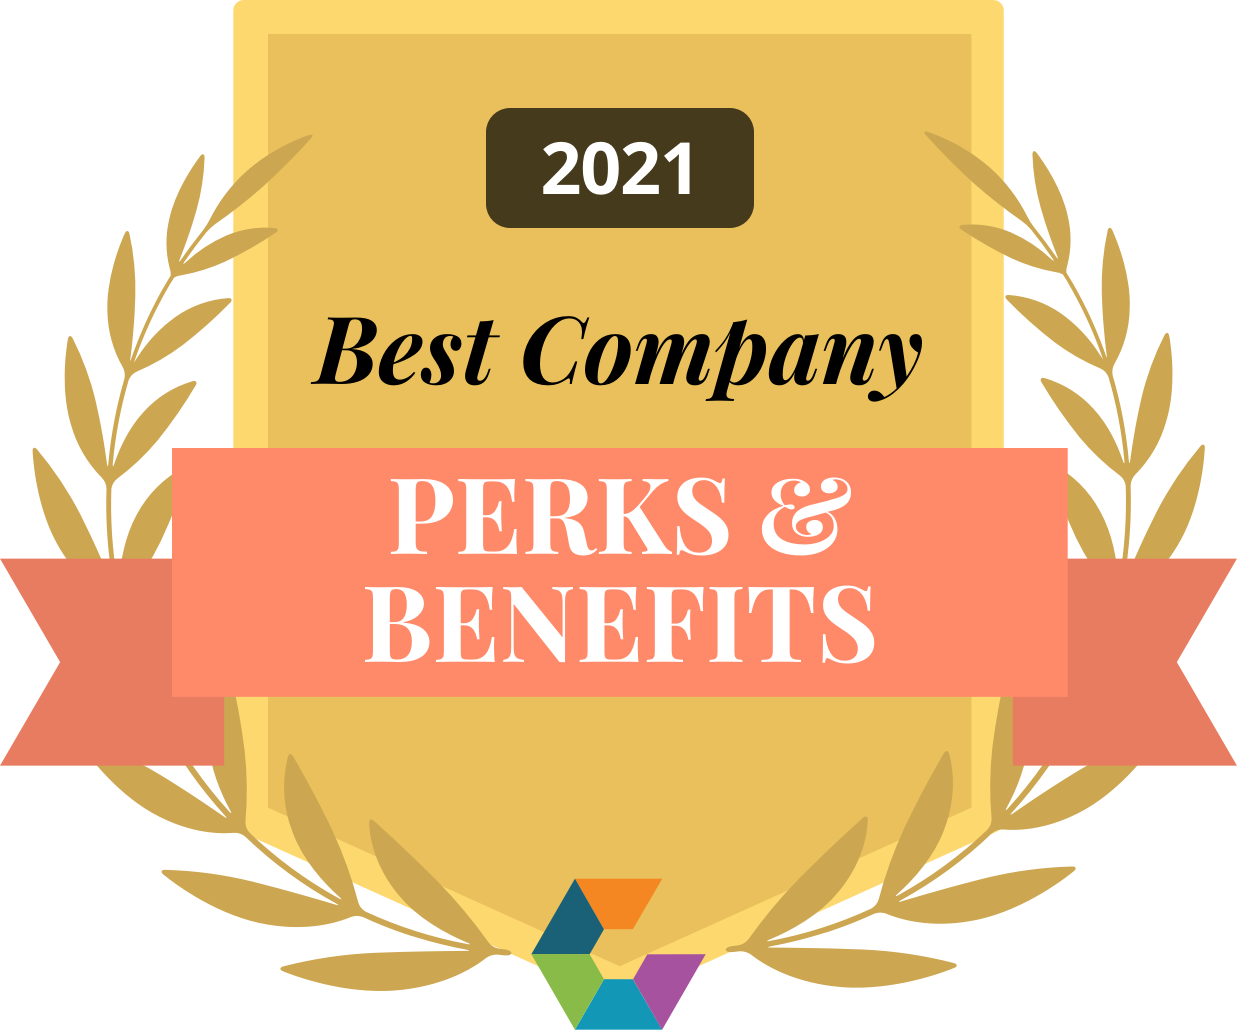 Best Company Perks and Benefits award